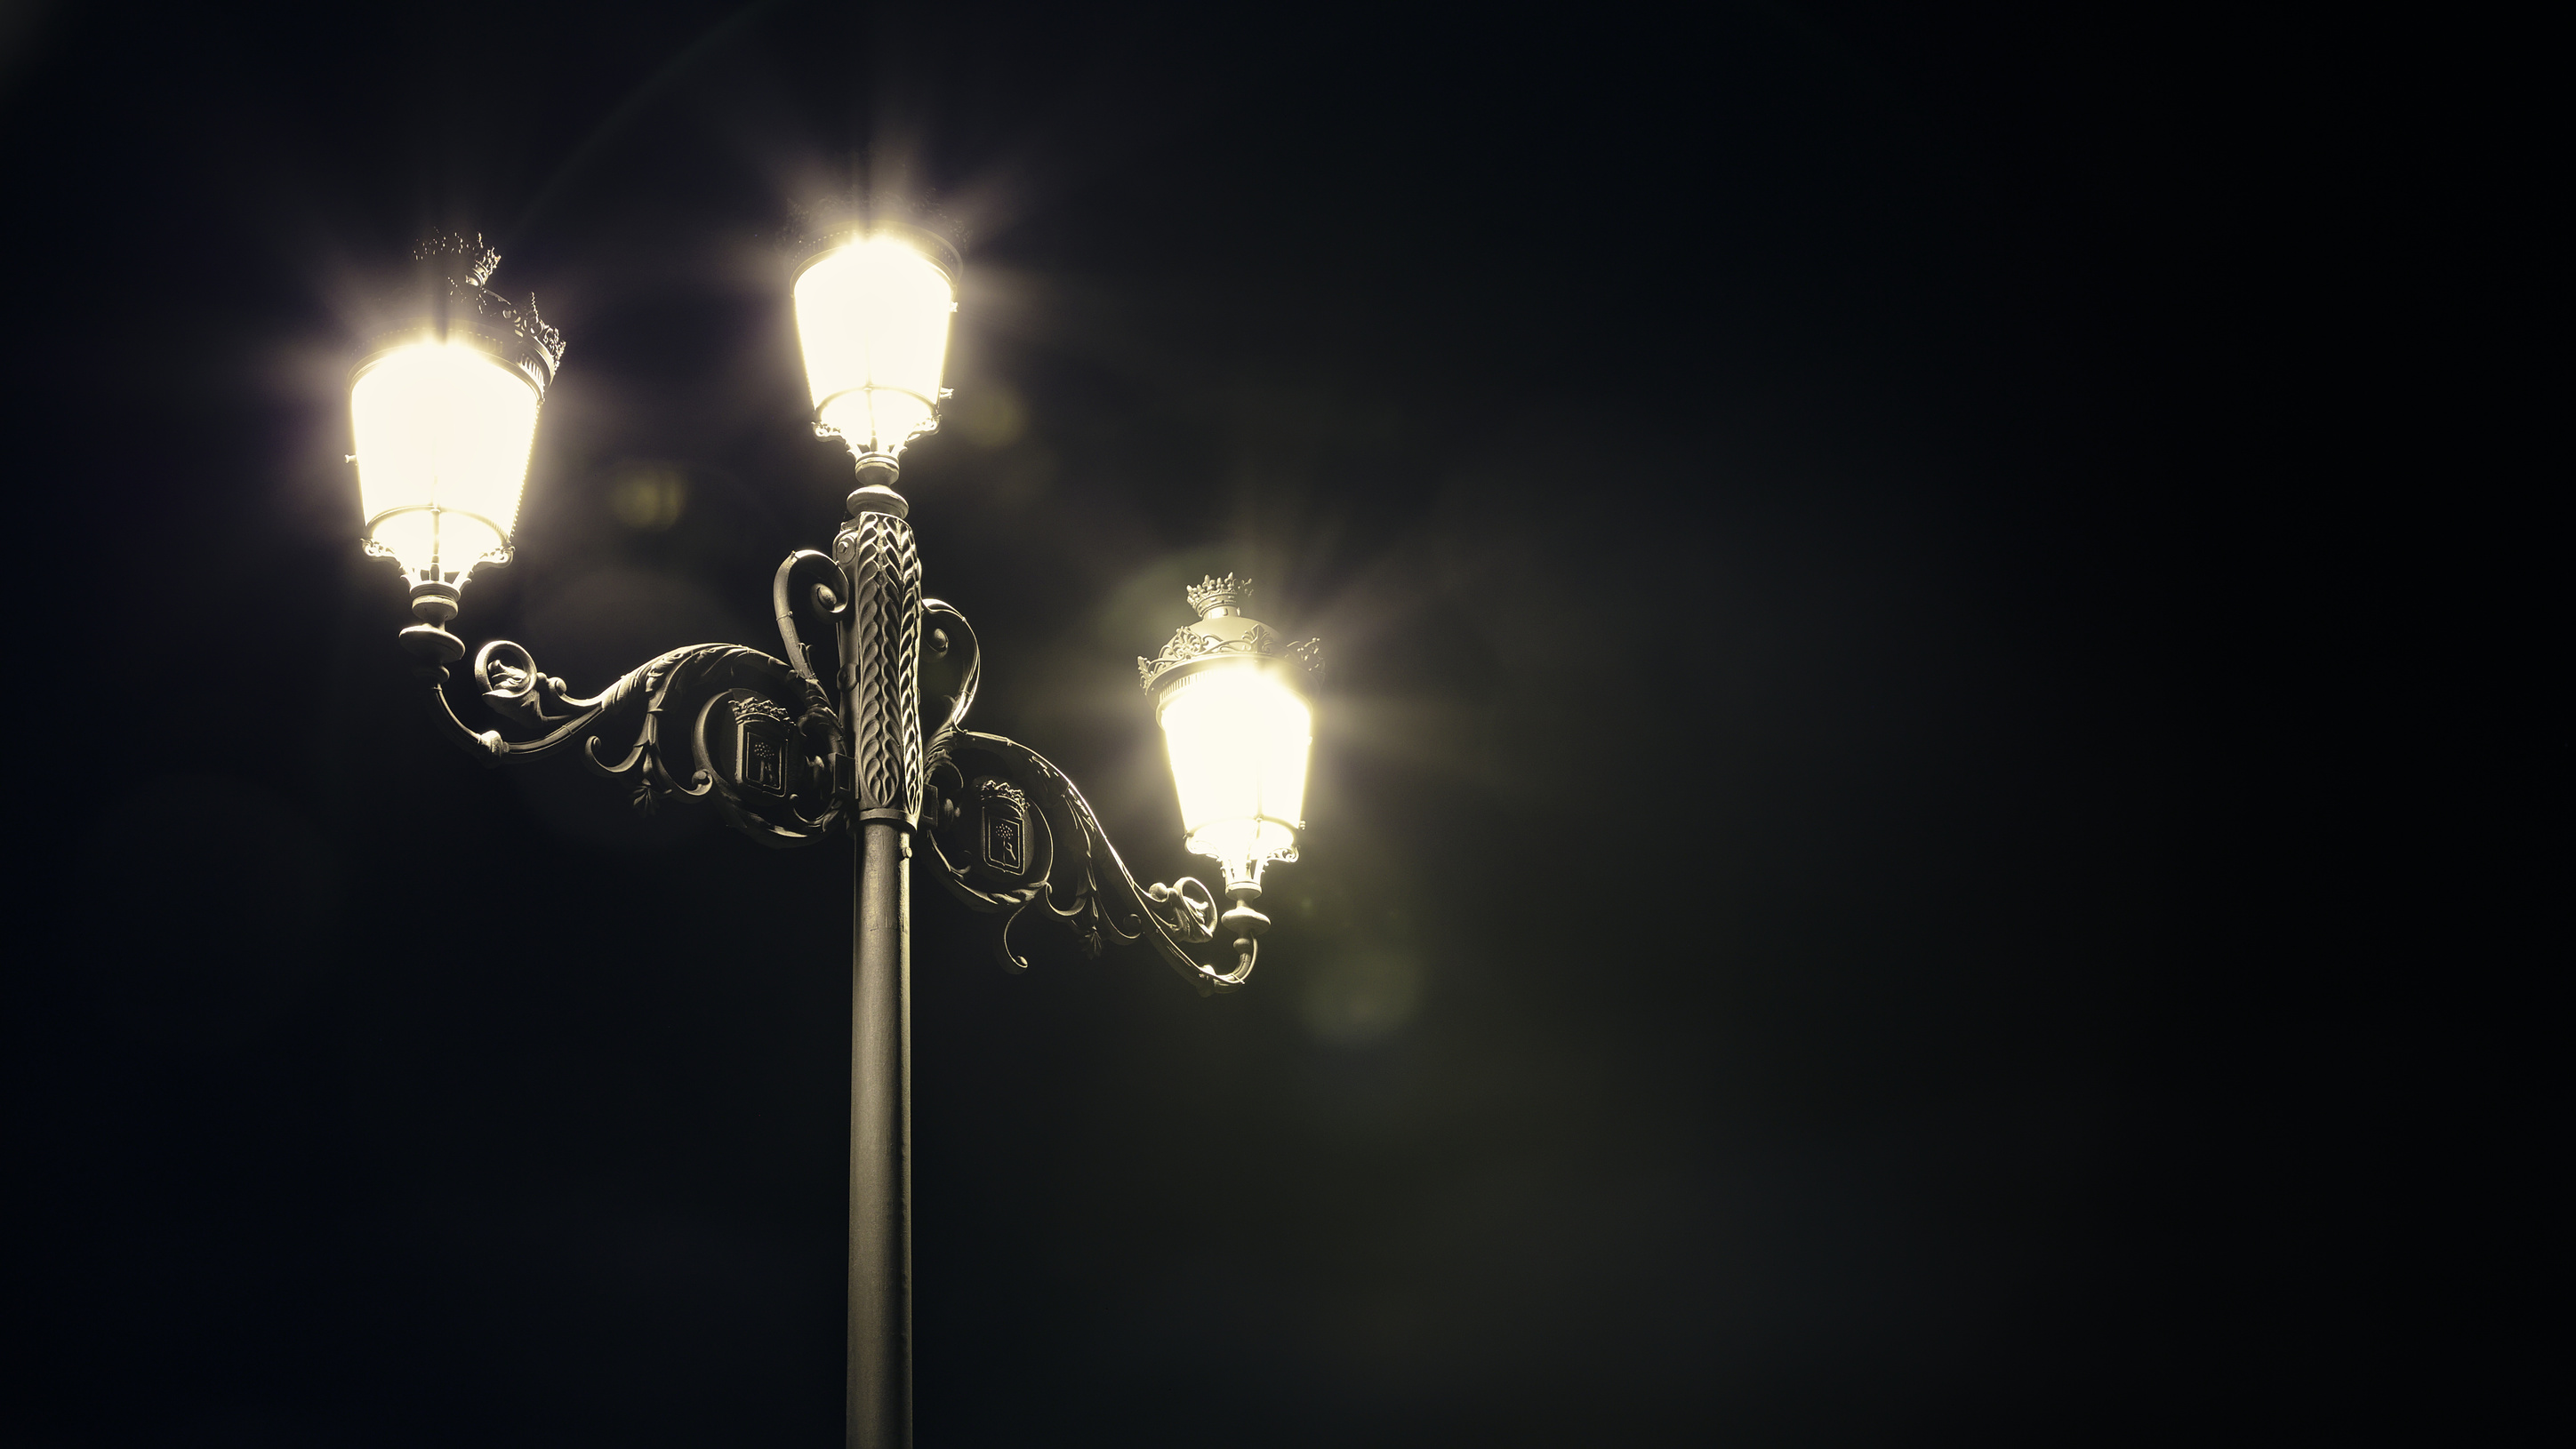 ランプ壁紙,街路灯,照明器具,点灯,光,白熱電球